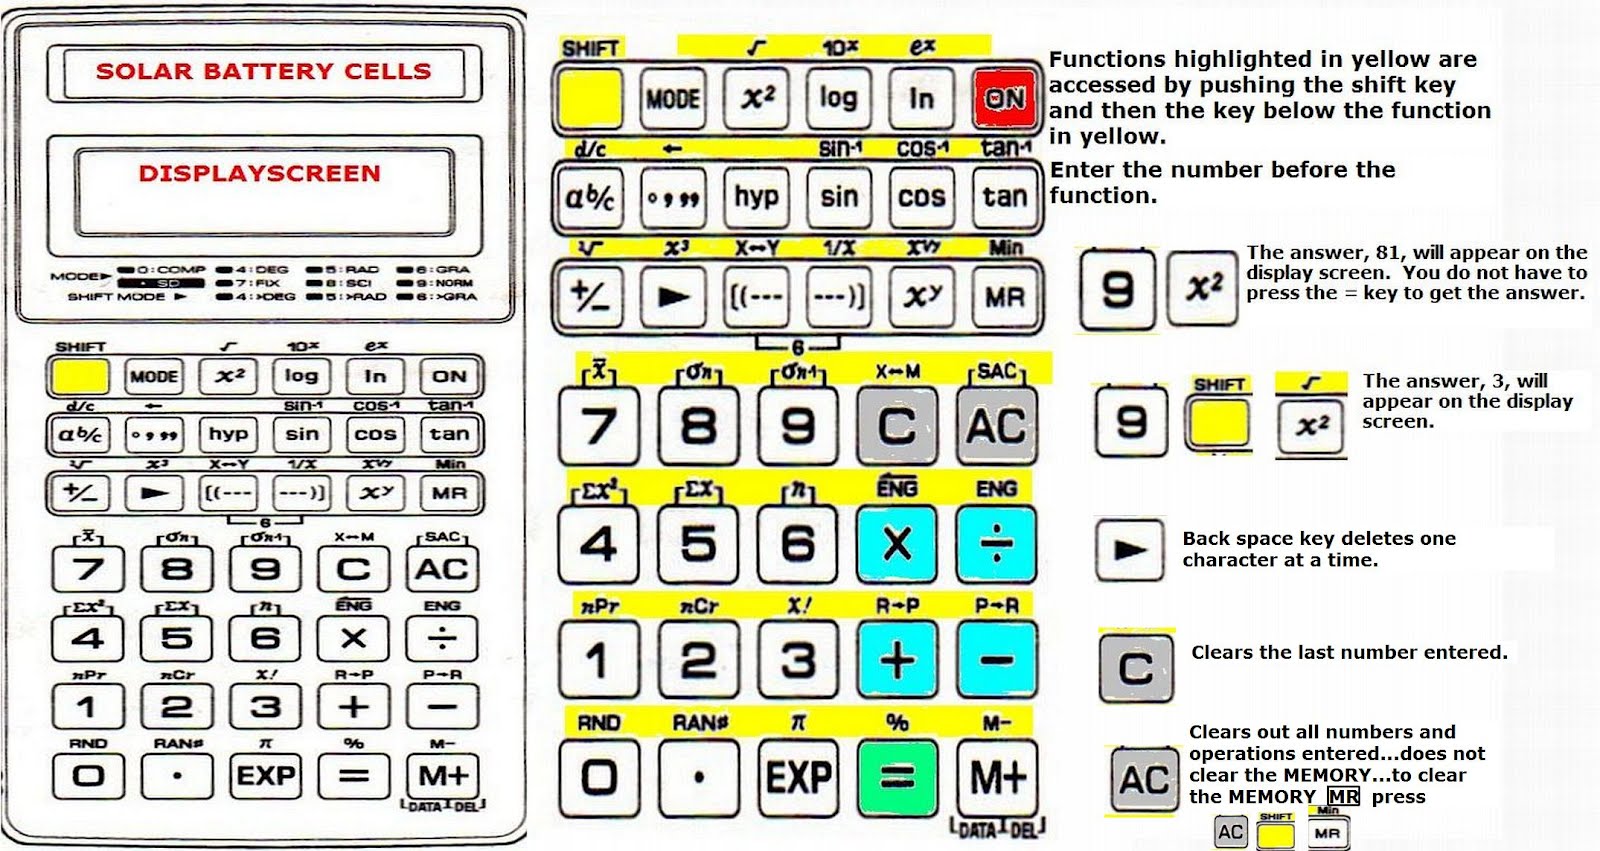 User Manual For My Casio Fx-260 Solar Calculator